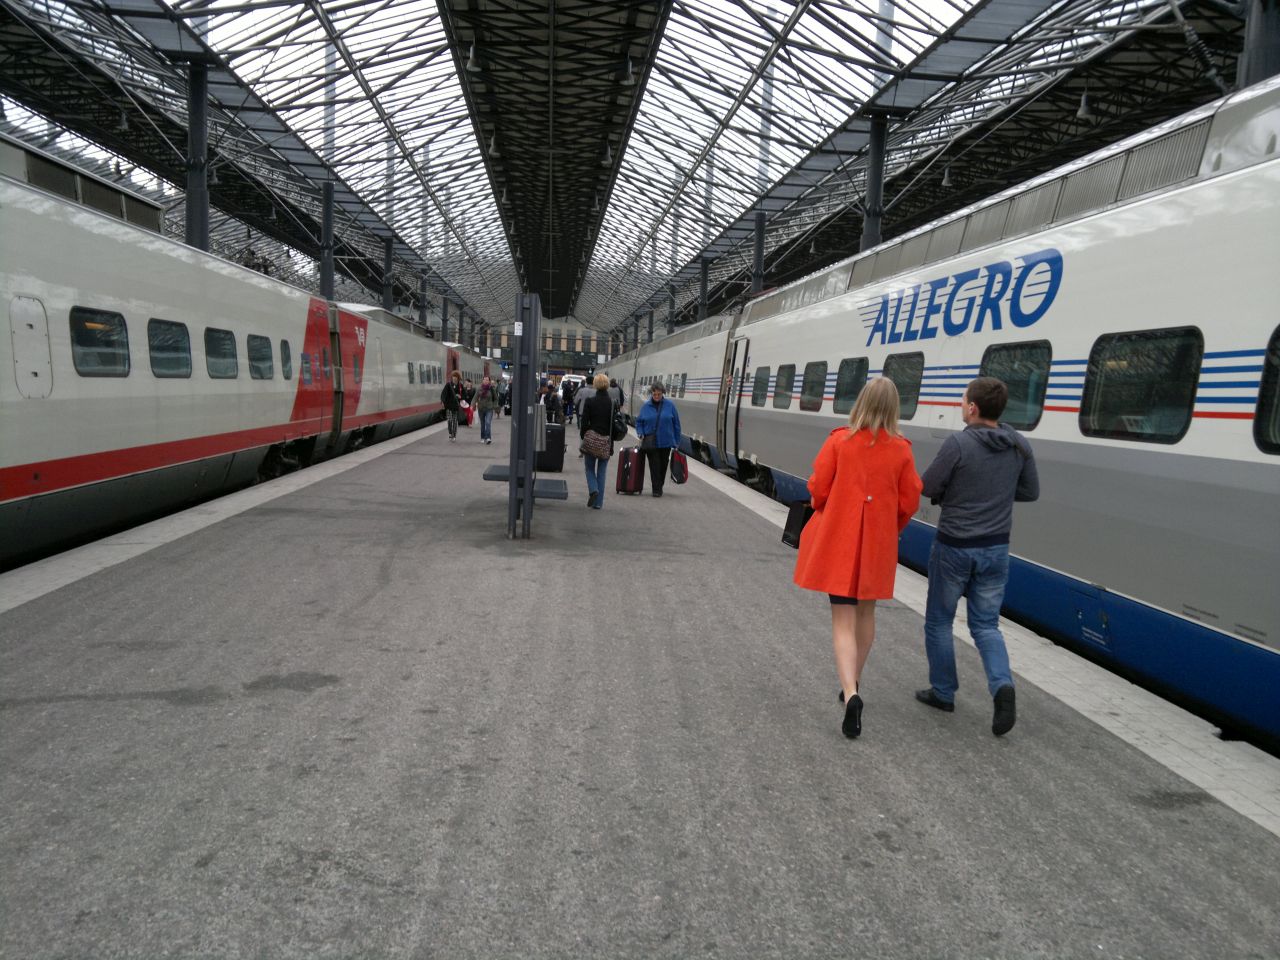 Vlaky Allegro v Helsinkách. Foto: Oleg Kuzněcov / Flickr.com